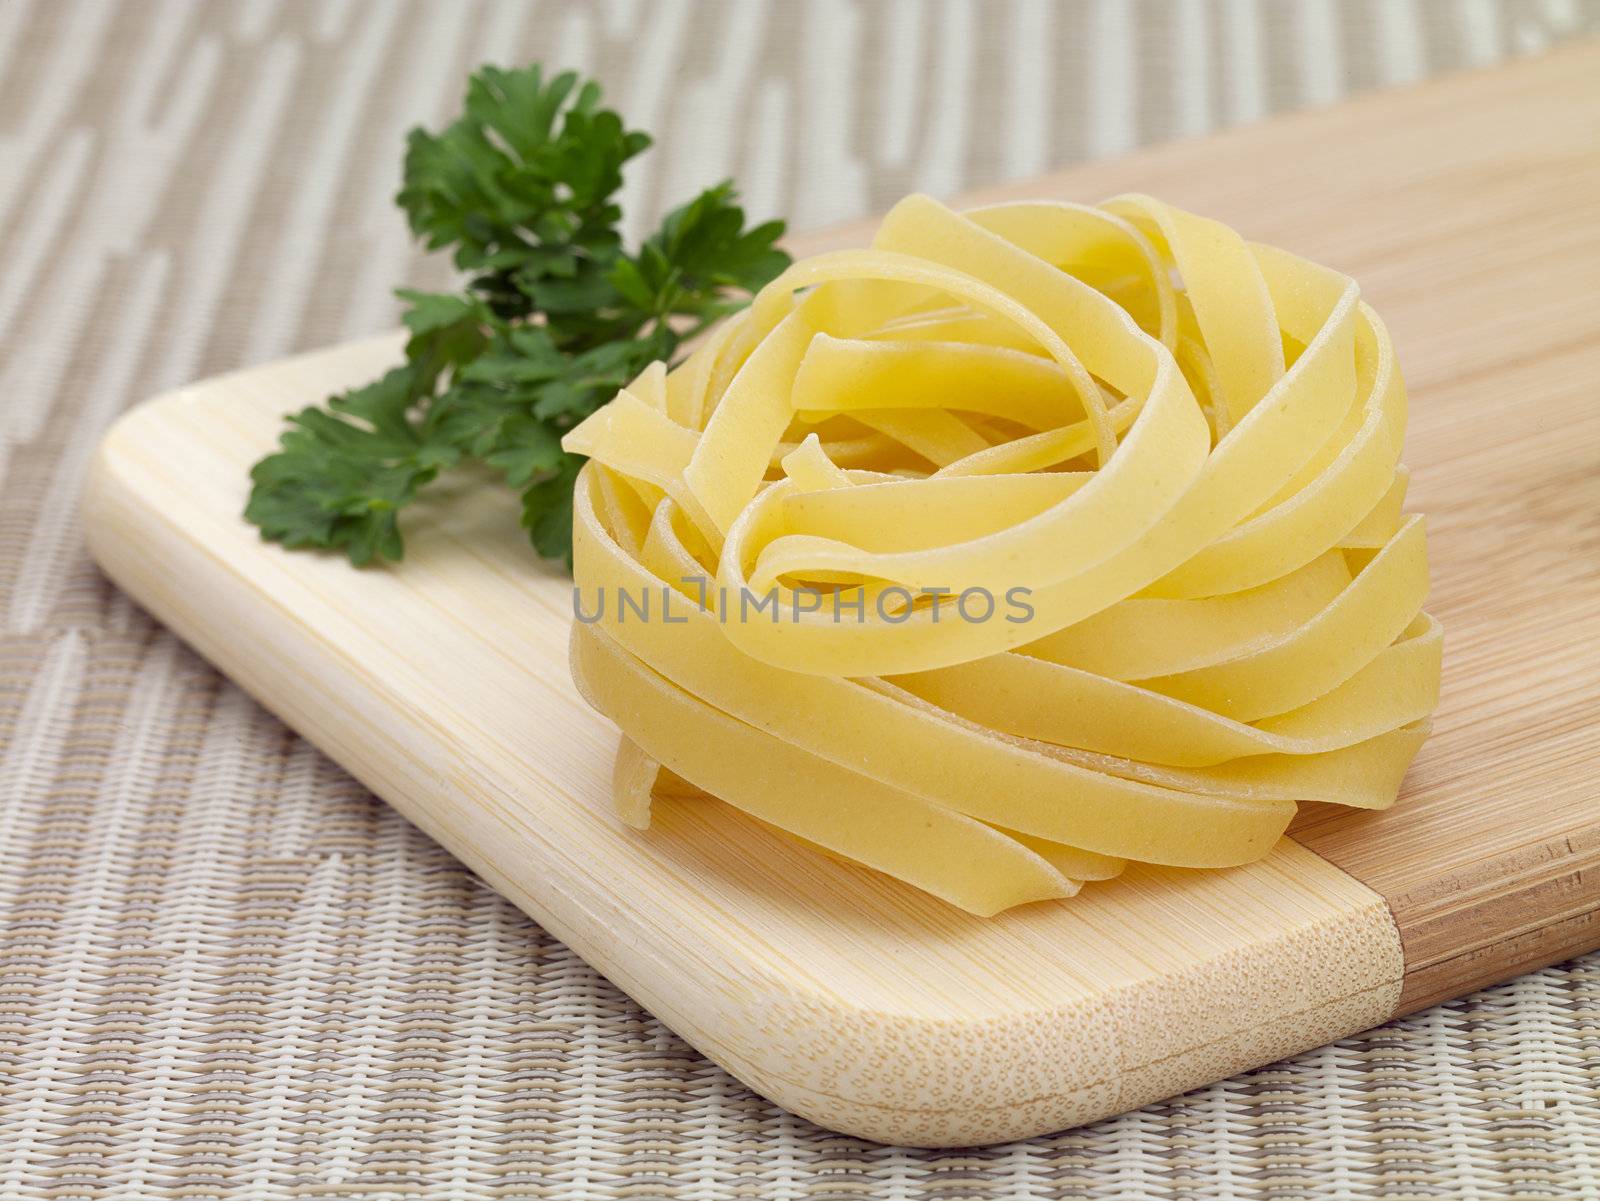 A nest of dry tagliatelle pasta on a cutting board